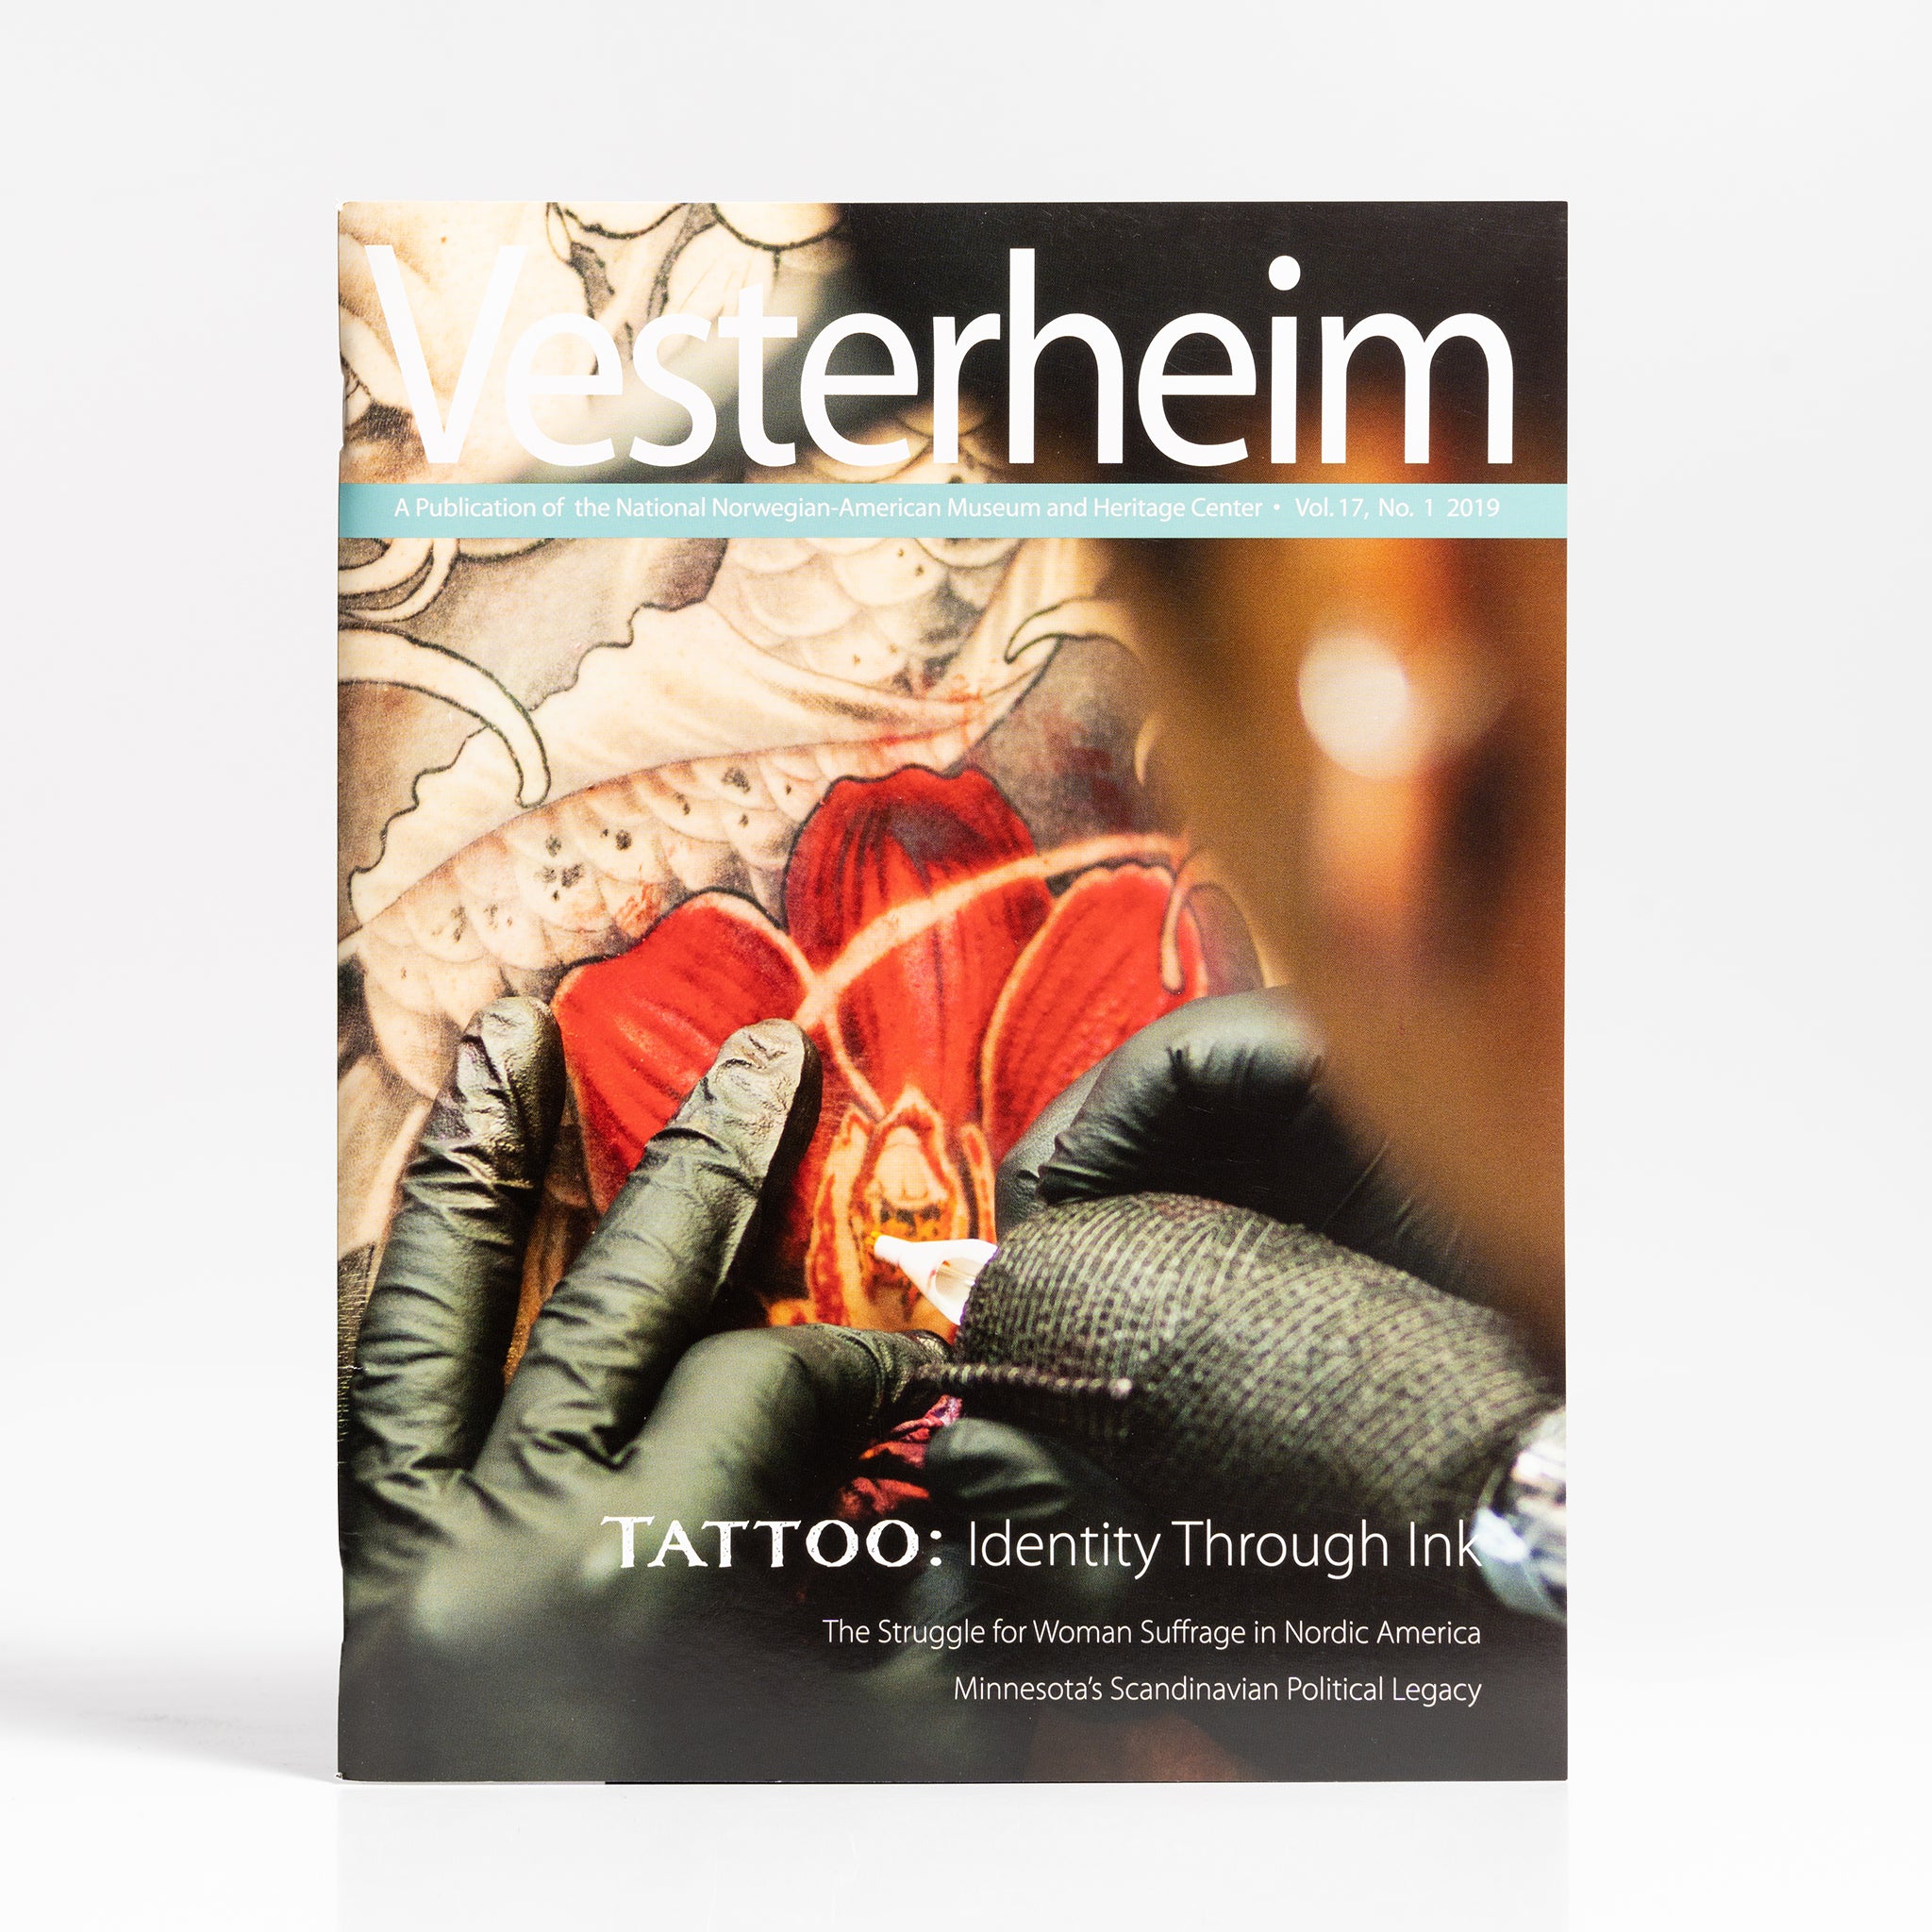 Vesterheim Magazine Vol. 17, No. 1 2019 - Tattoo: Identity Through Ink